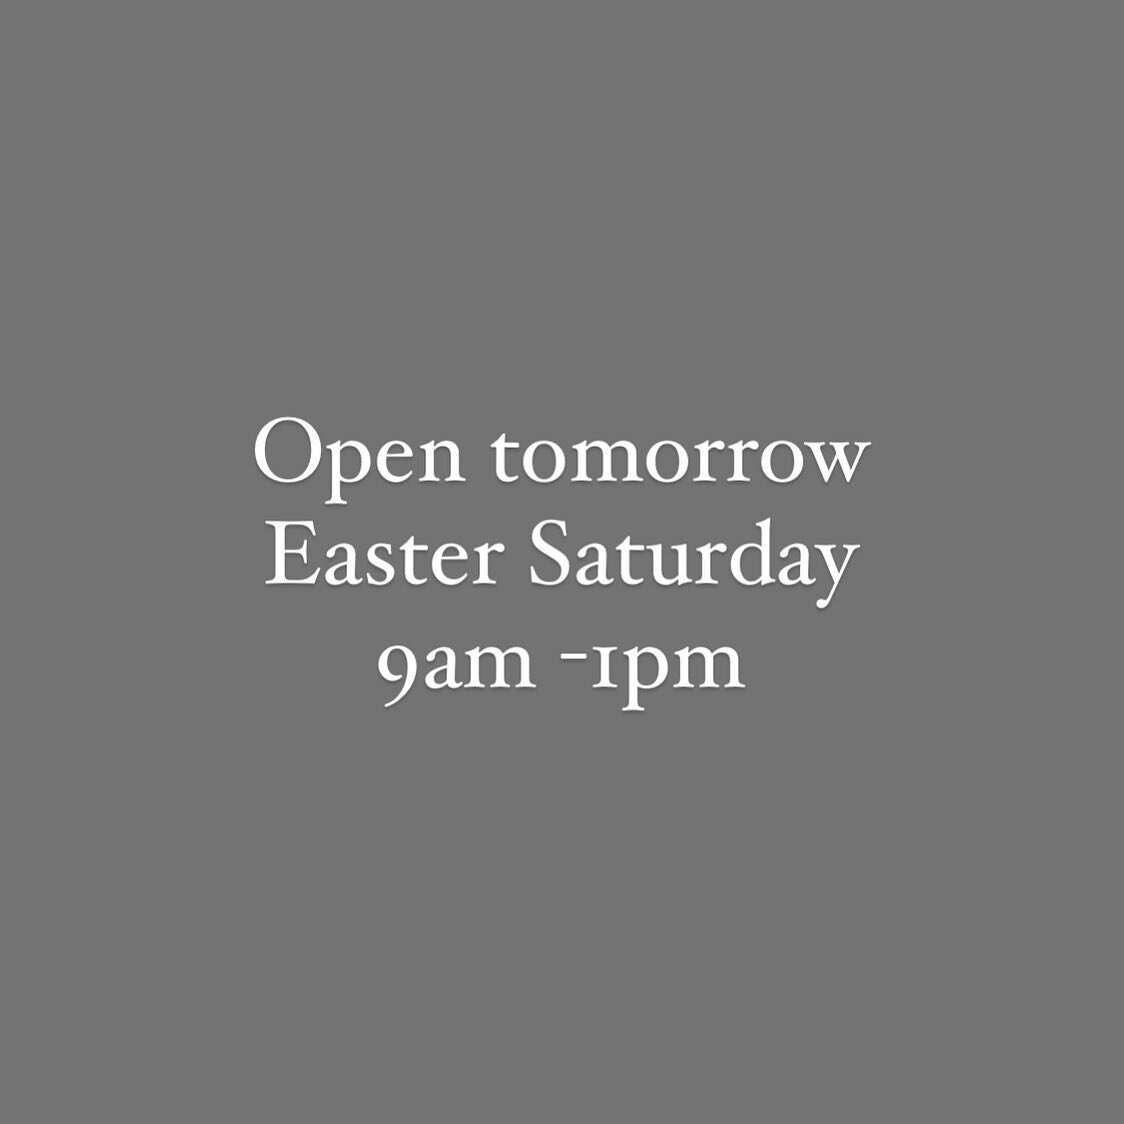 We are open tomorrow, Saturday 9am - 1pm ✨

#alburypictureframers #alburywodonga #alburyframing #alburyframer #alburywodongabusiness